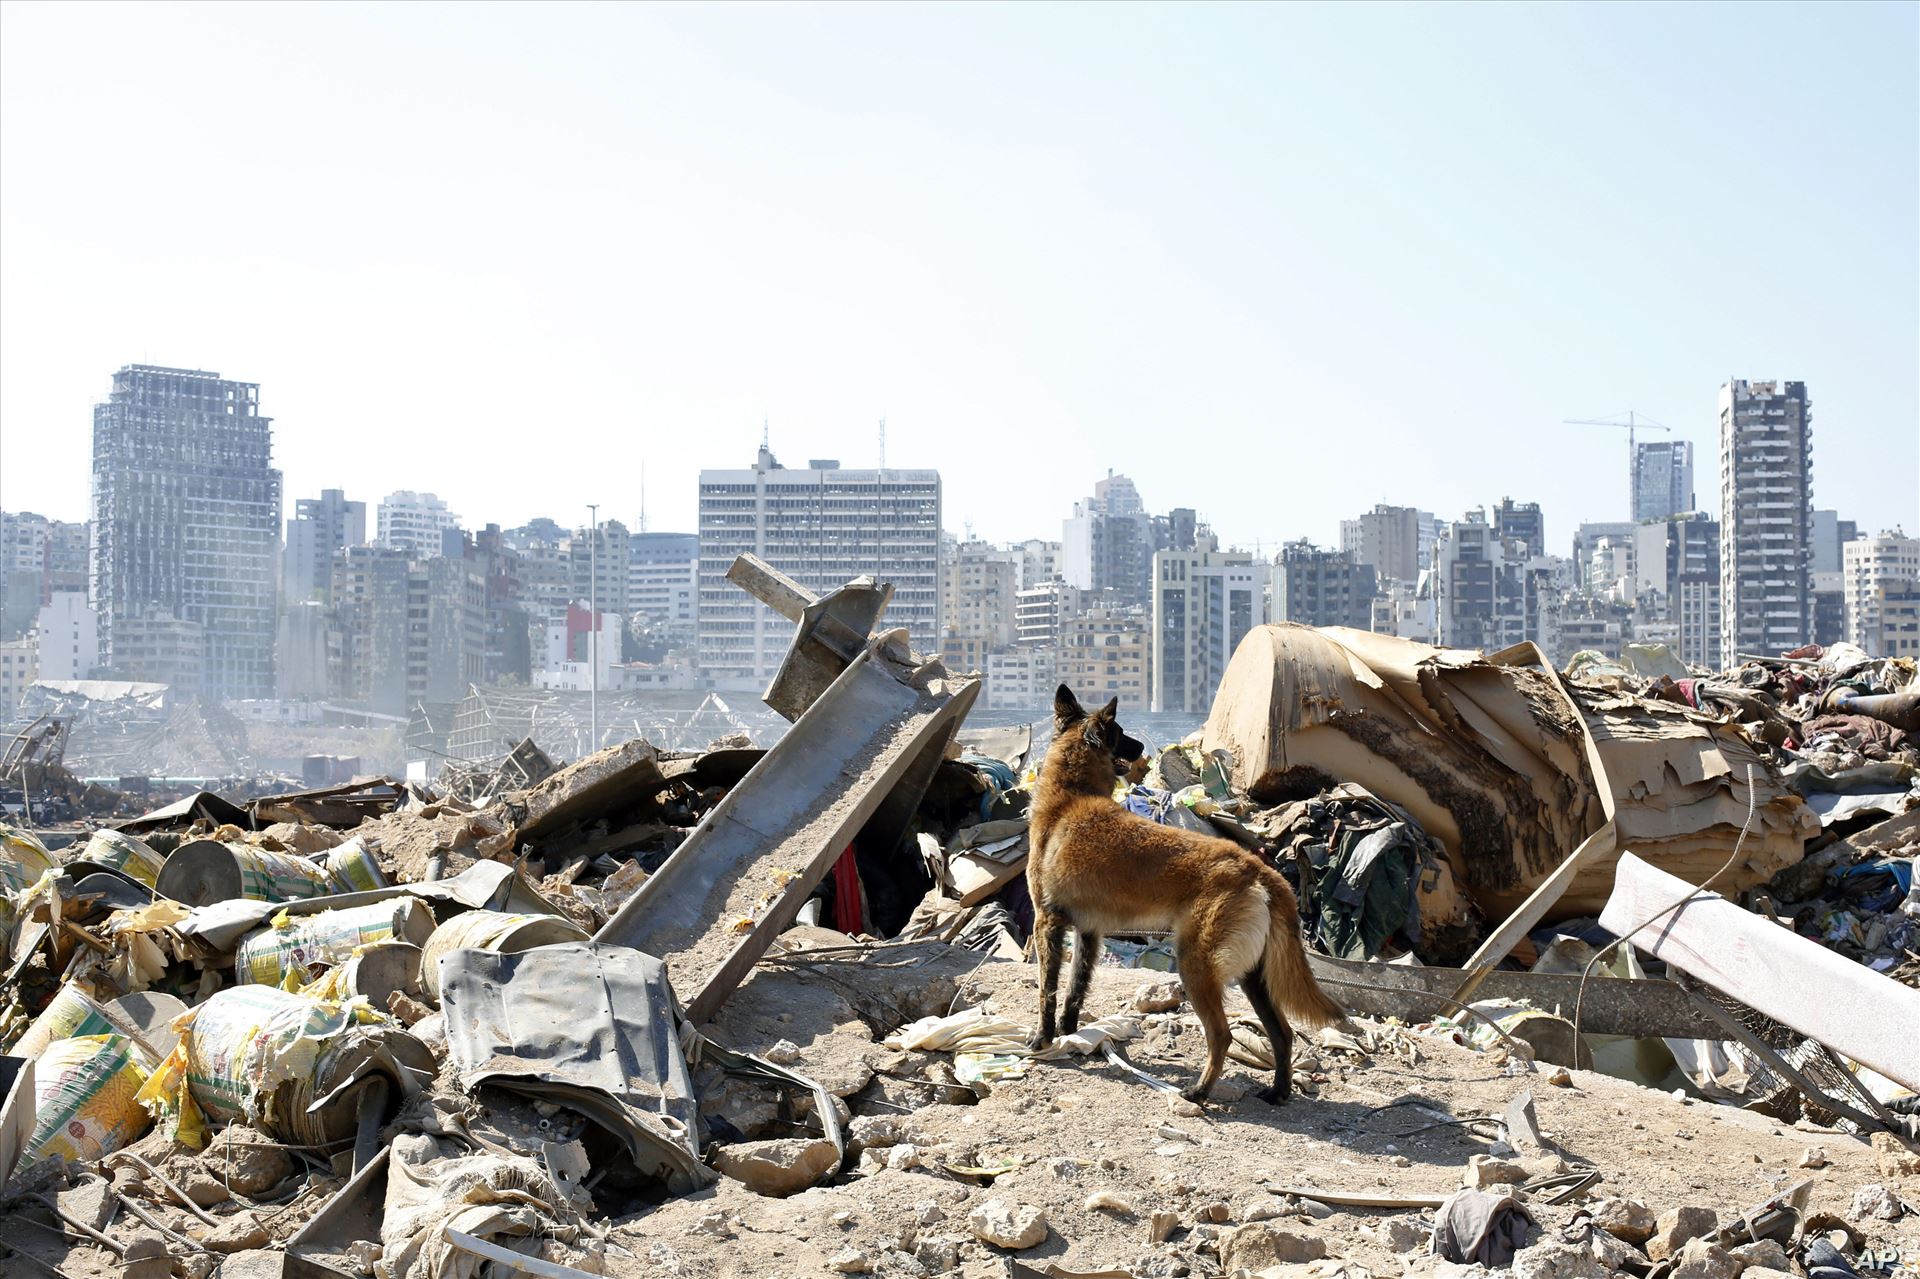 APTOPIX Lebanon Explosion عکس روز: از تخریب انفجار بیروت تا صف طولانی مسافران در فرودگاه‌ها
آلبوم عکس - جمعه ۱۷ مرداد ۱۳۹۹
۱۷ مرداد ۱۳۹۹ by mohsen dehbashi